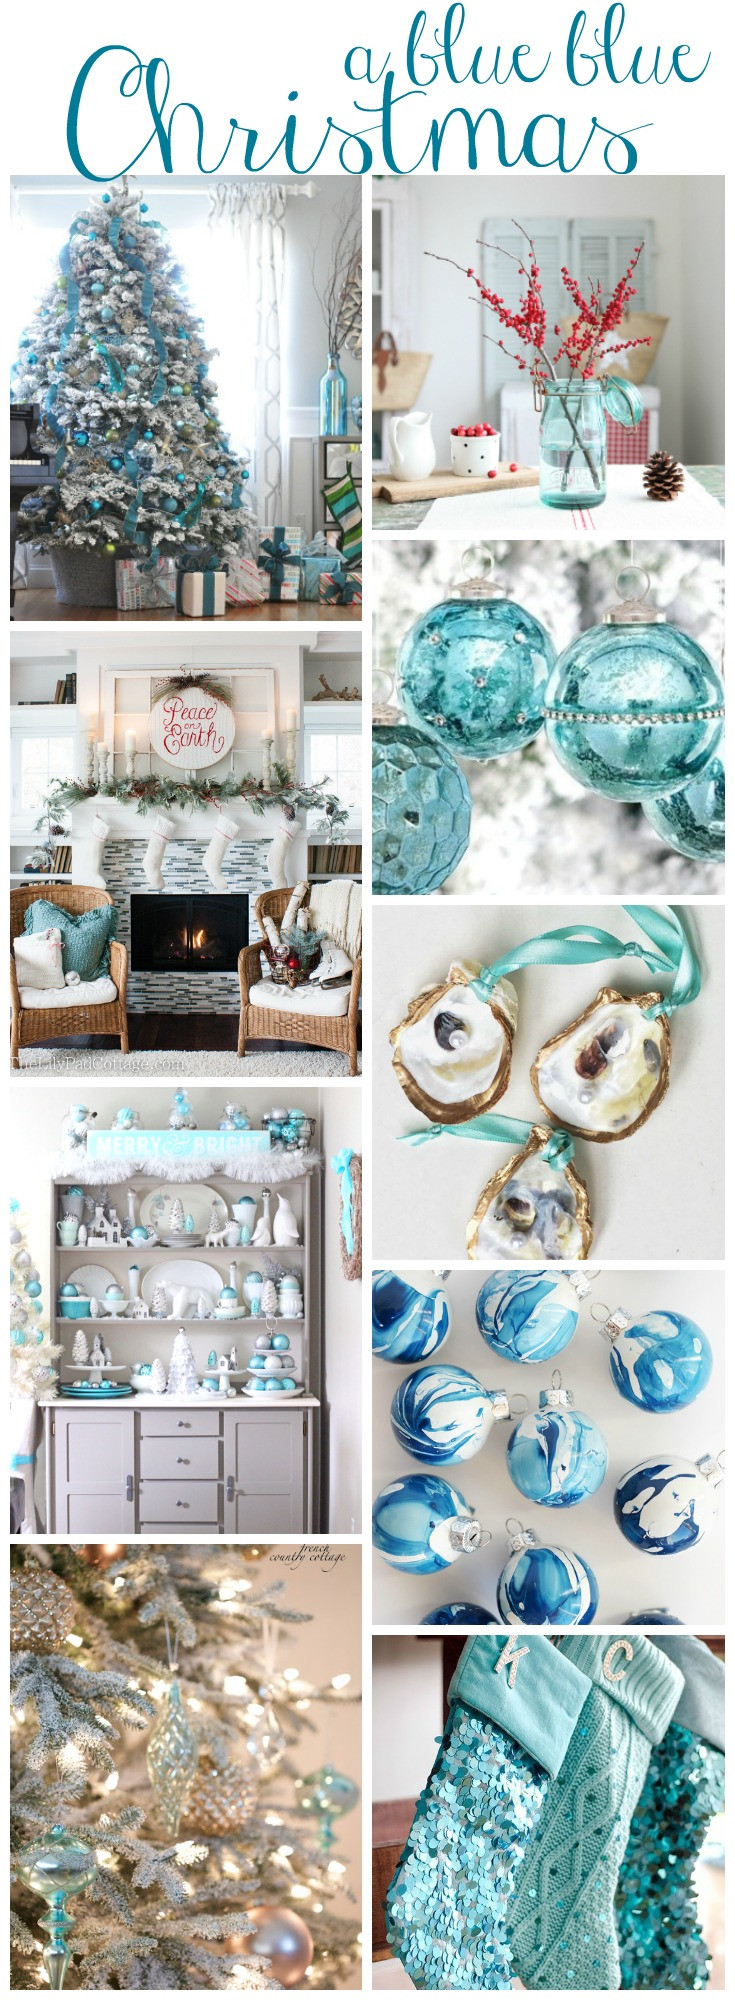 DIY Christmas Decorations Pinterest
 A Blue Blue Christmas Style Series